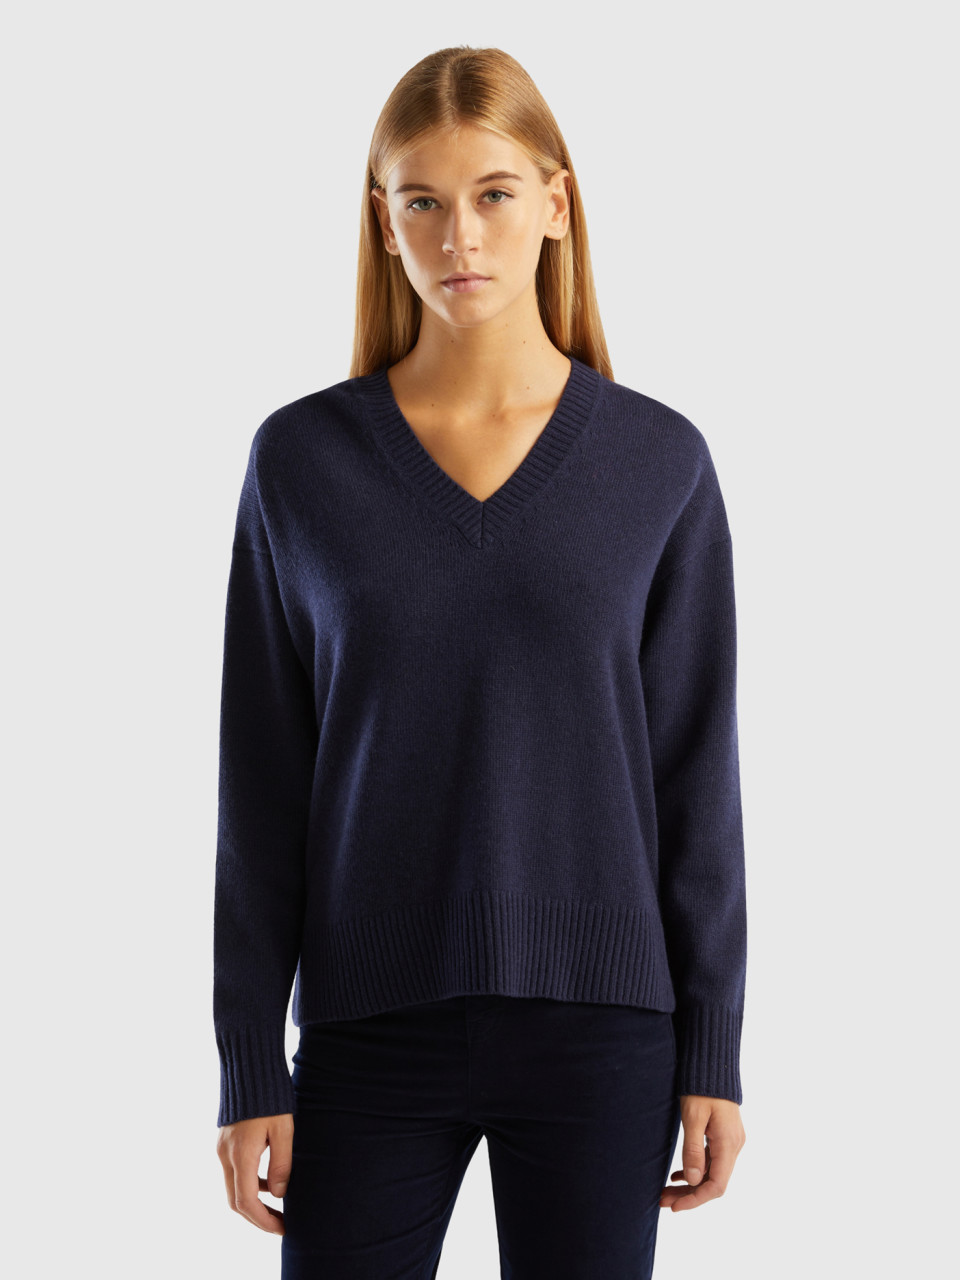 Benetton, Oversized Fit Sweater With Slits, Dark Blue, Women